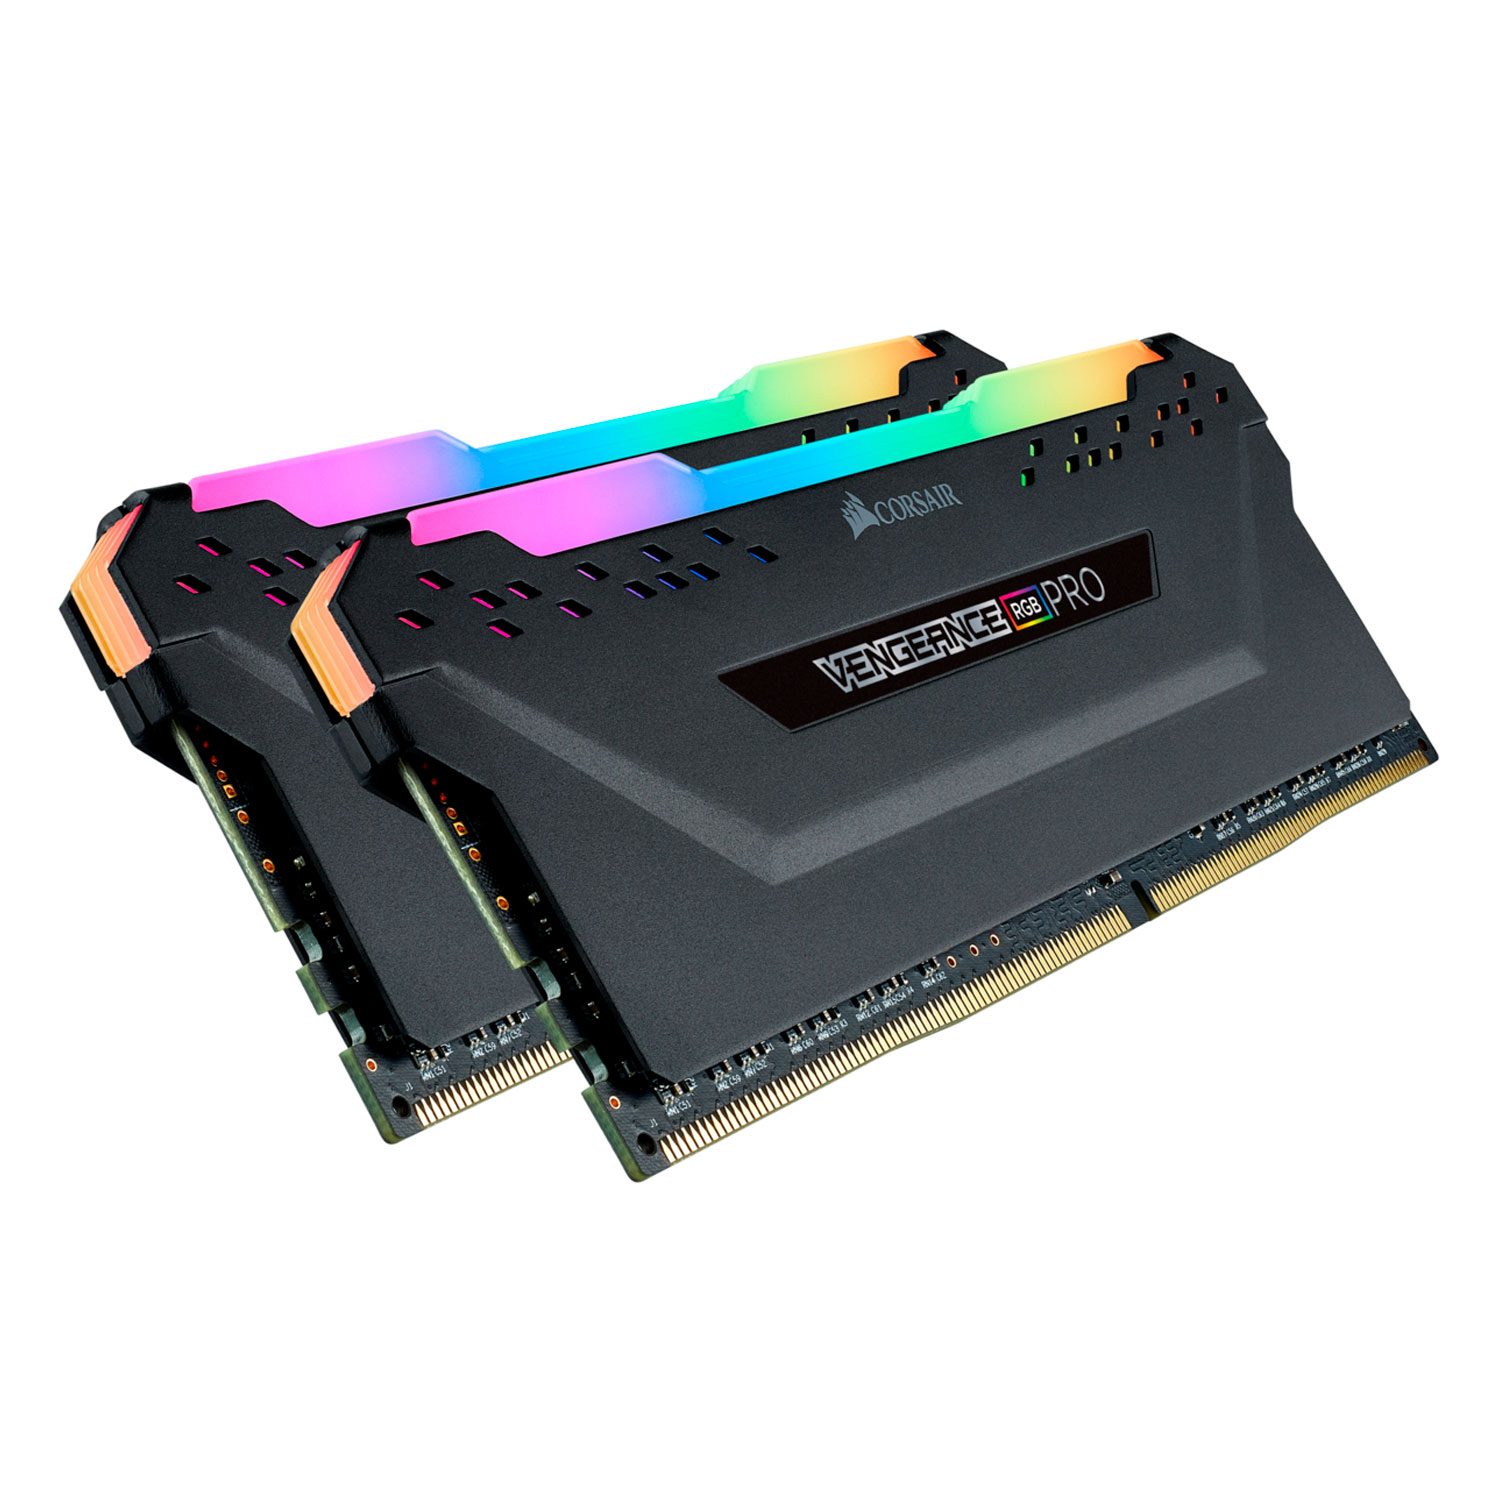 Memória RAM Corsair Vengeance Pro RGB 32GB (2x16GB) DDR4 3000MHz - CMW32GX4M2D3000C16